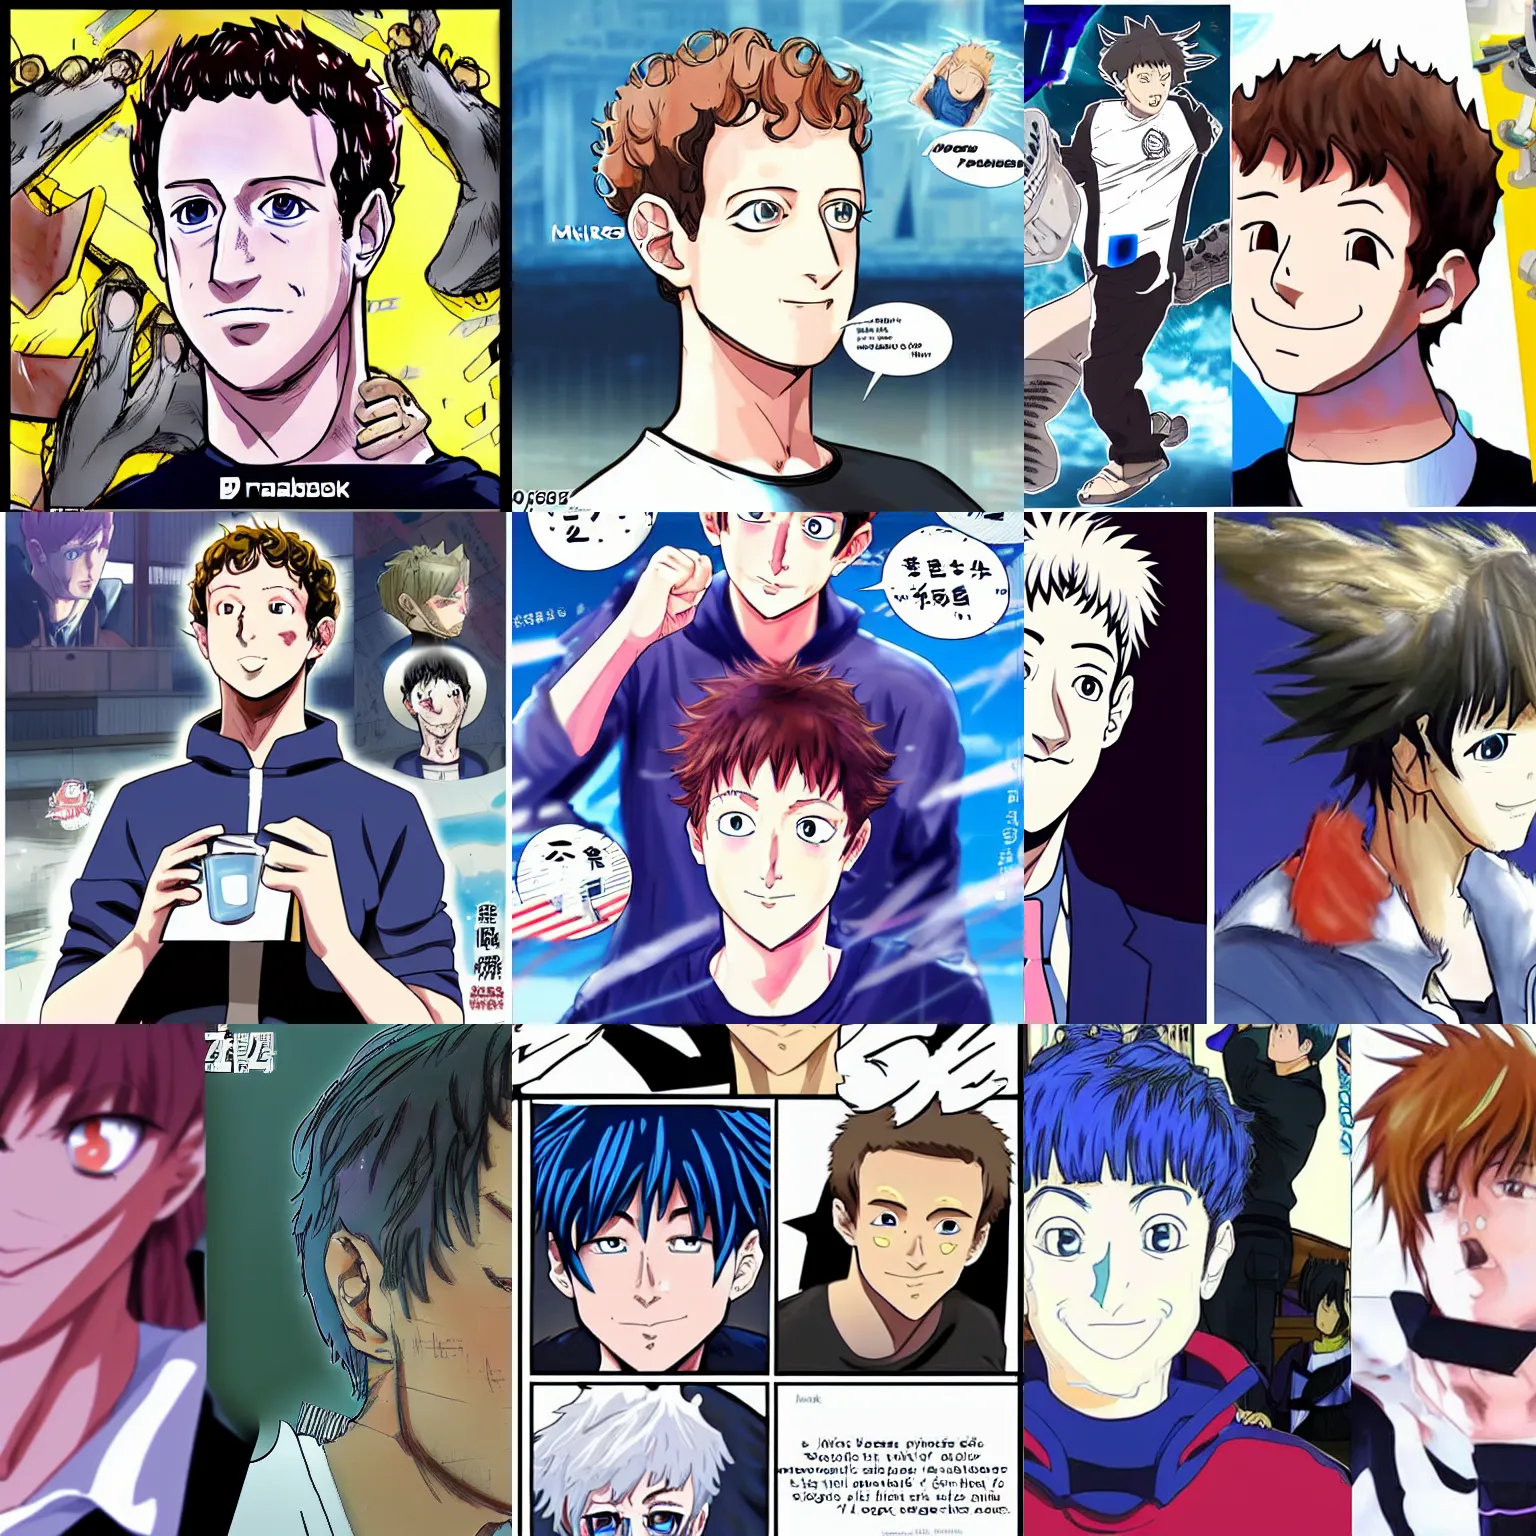 Prompt: mark Zuckerberg anime and manga final form